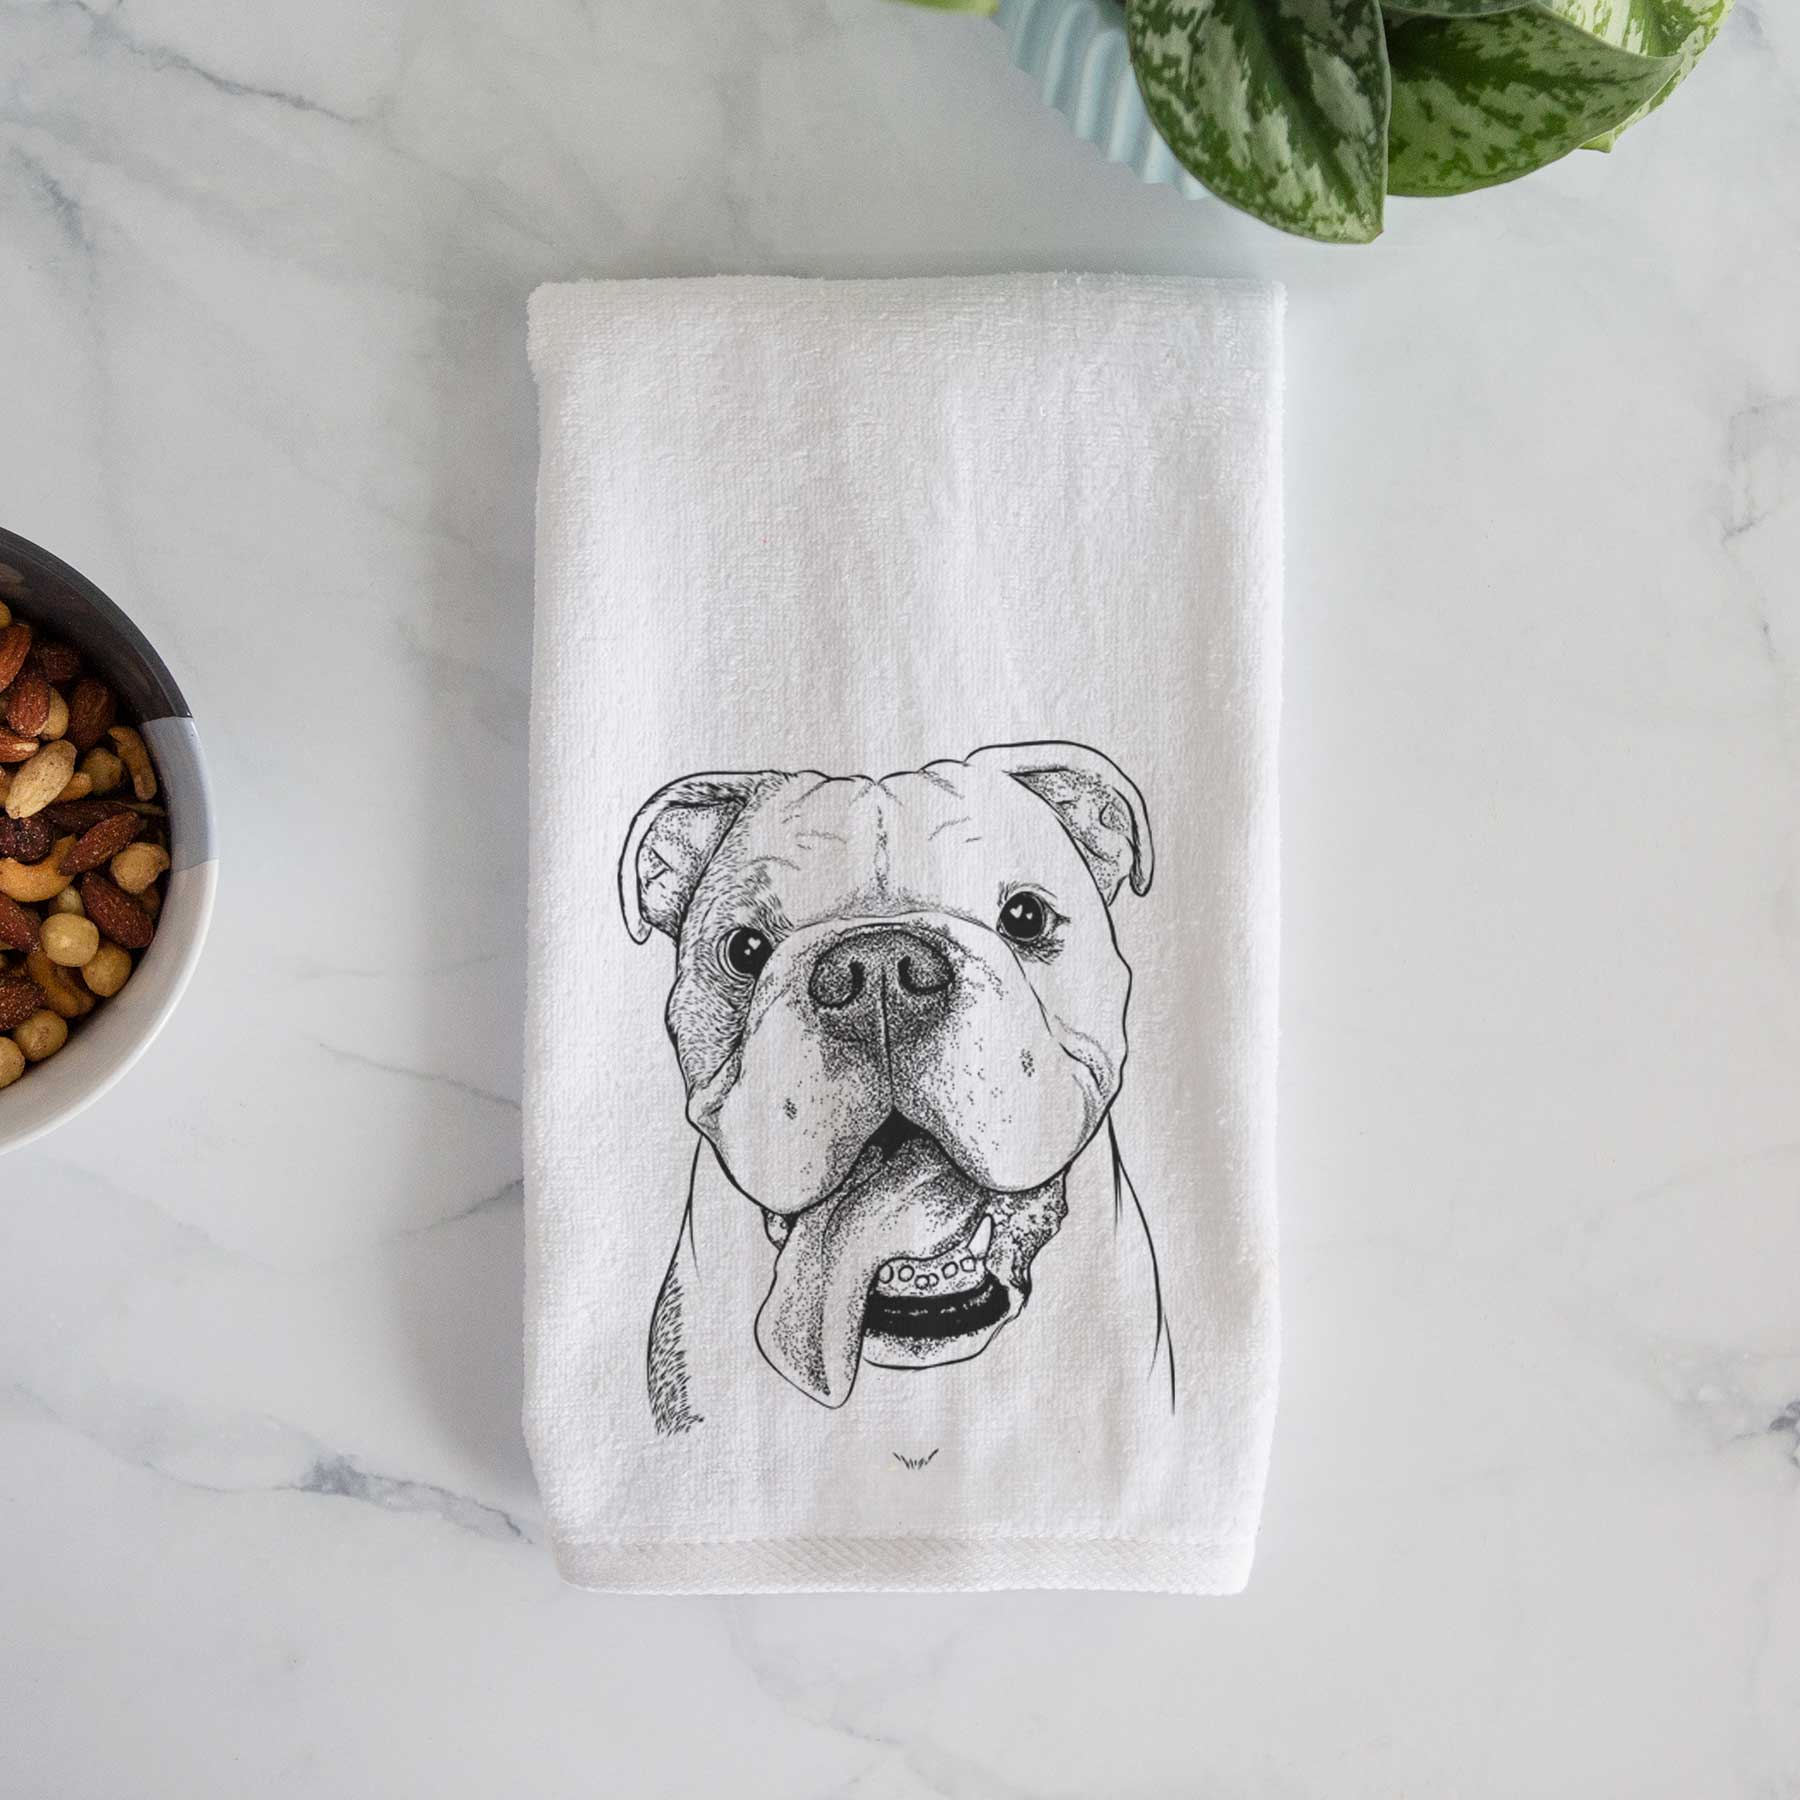 Hank the English Bulldog Hand Towel